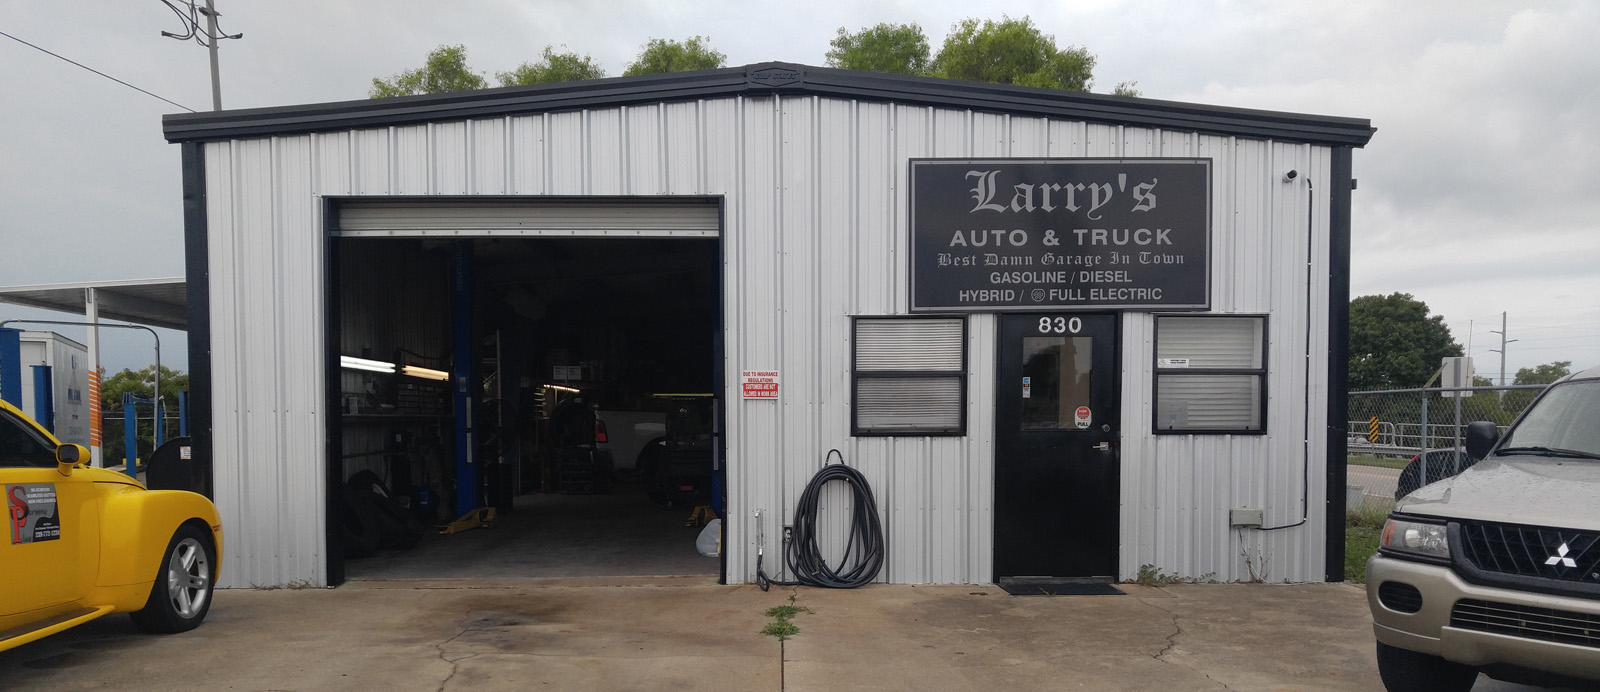 Larry’s Auto & Truck Service Center